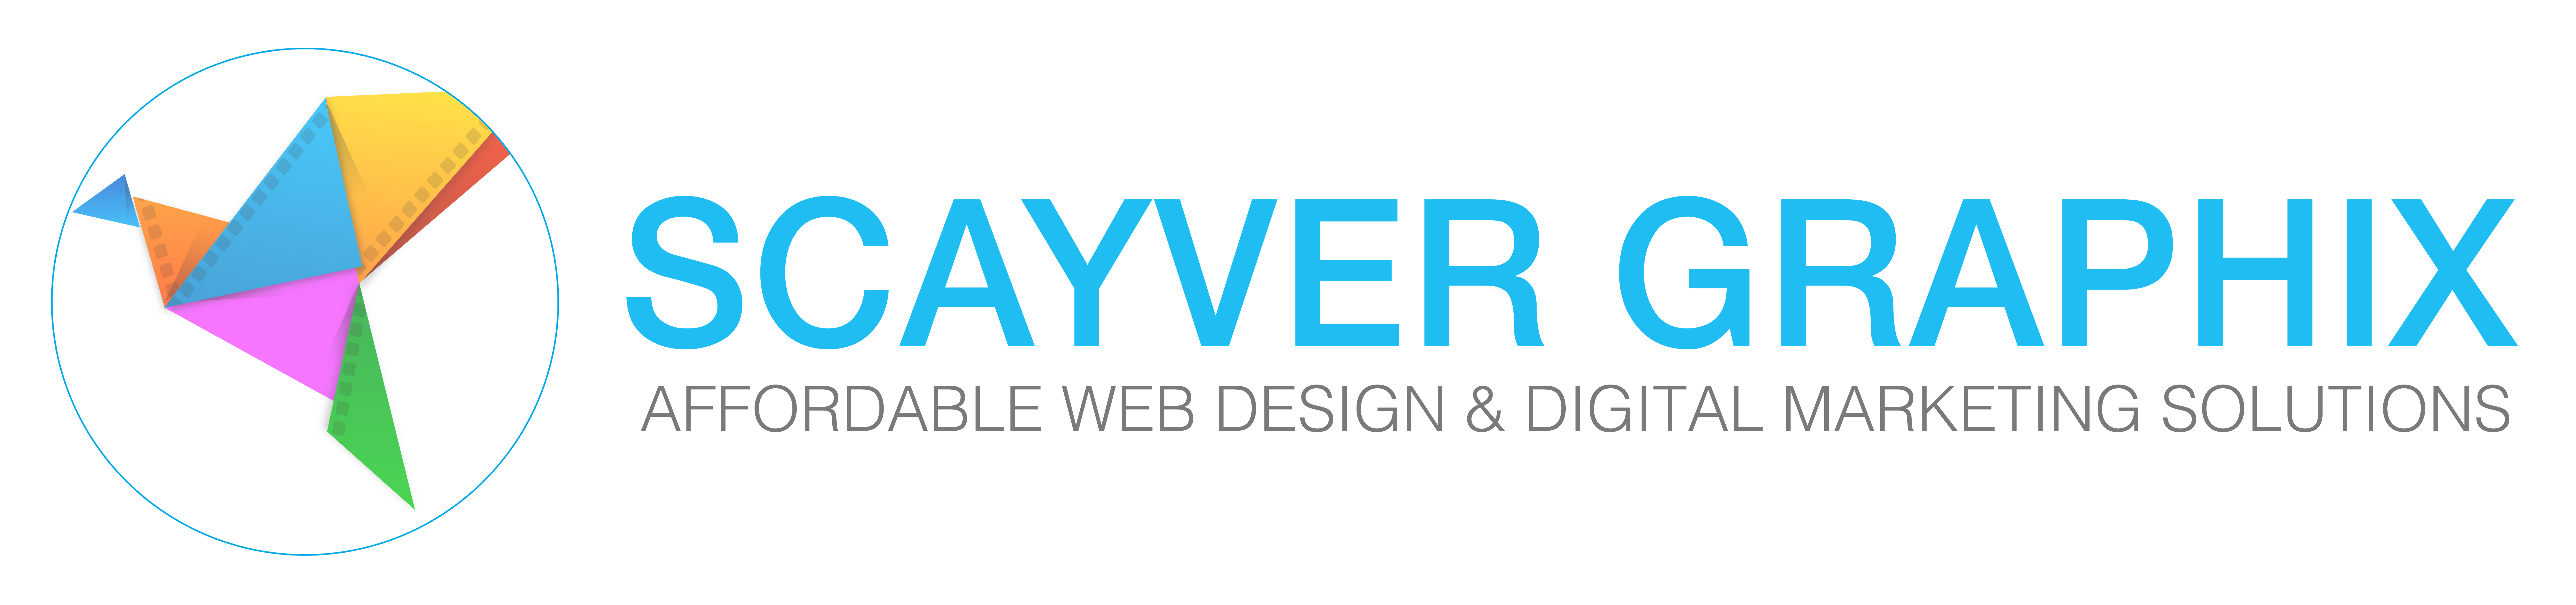 Scayver Graphix Logo